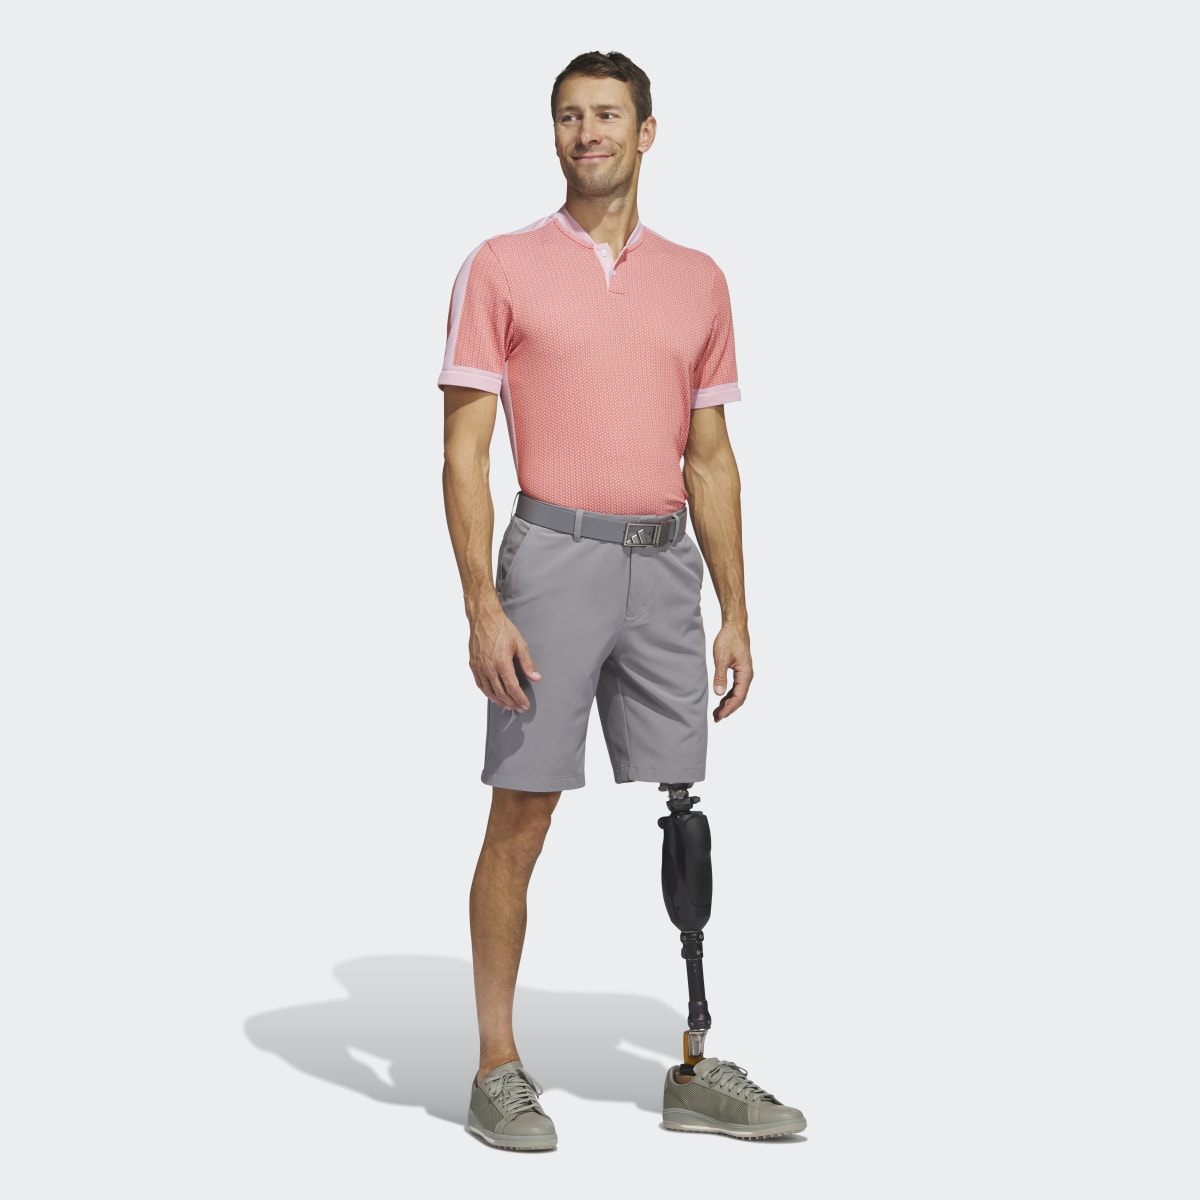 Adidas Ultimate365 Tour Textured PRIMEKNIT Golf Polo Shirt. 4